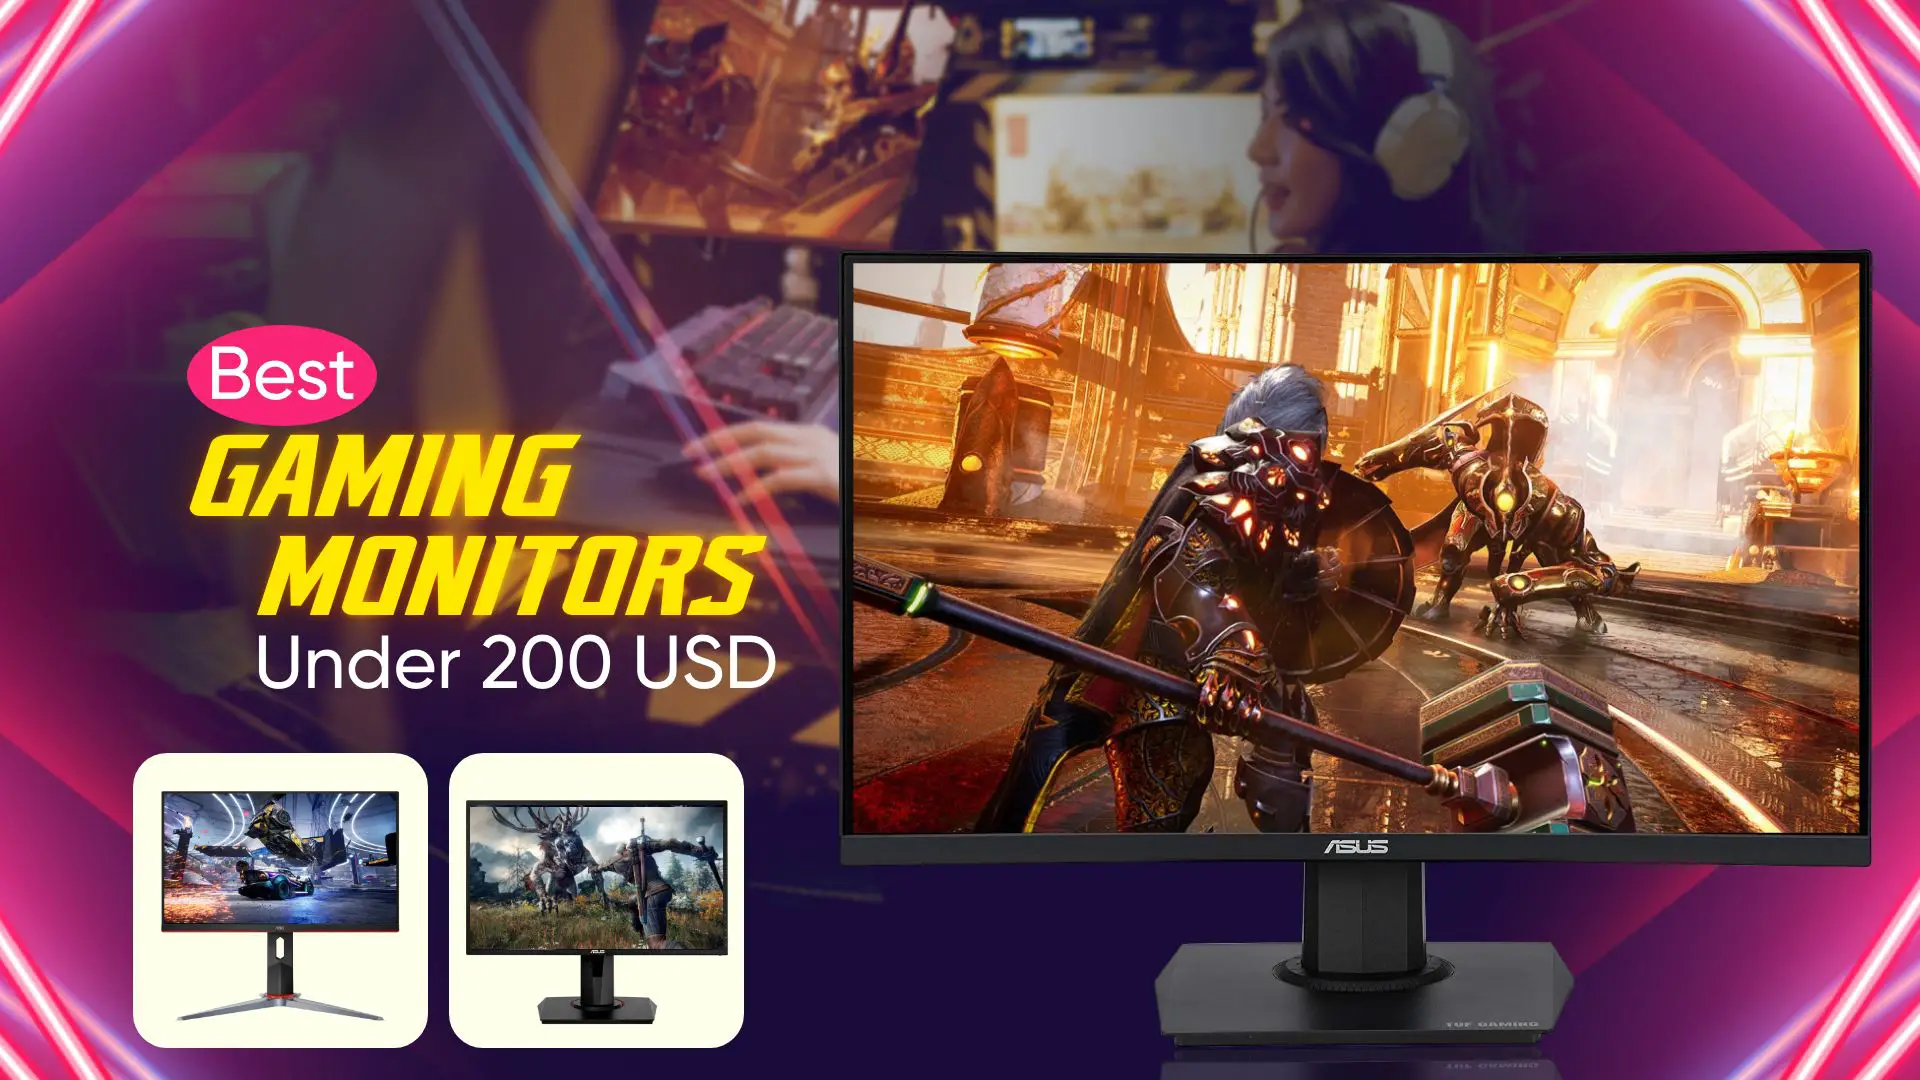 Best Gaming Monitors Under 200 USD